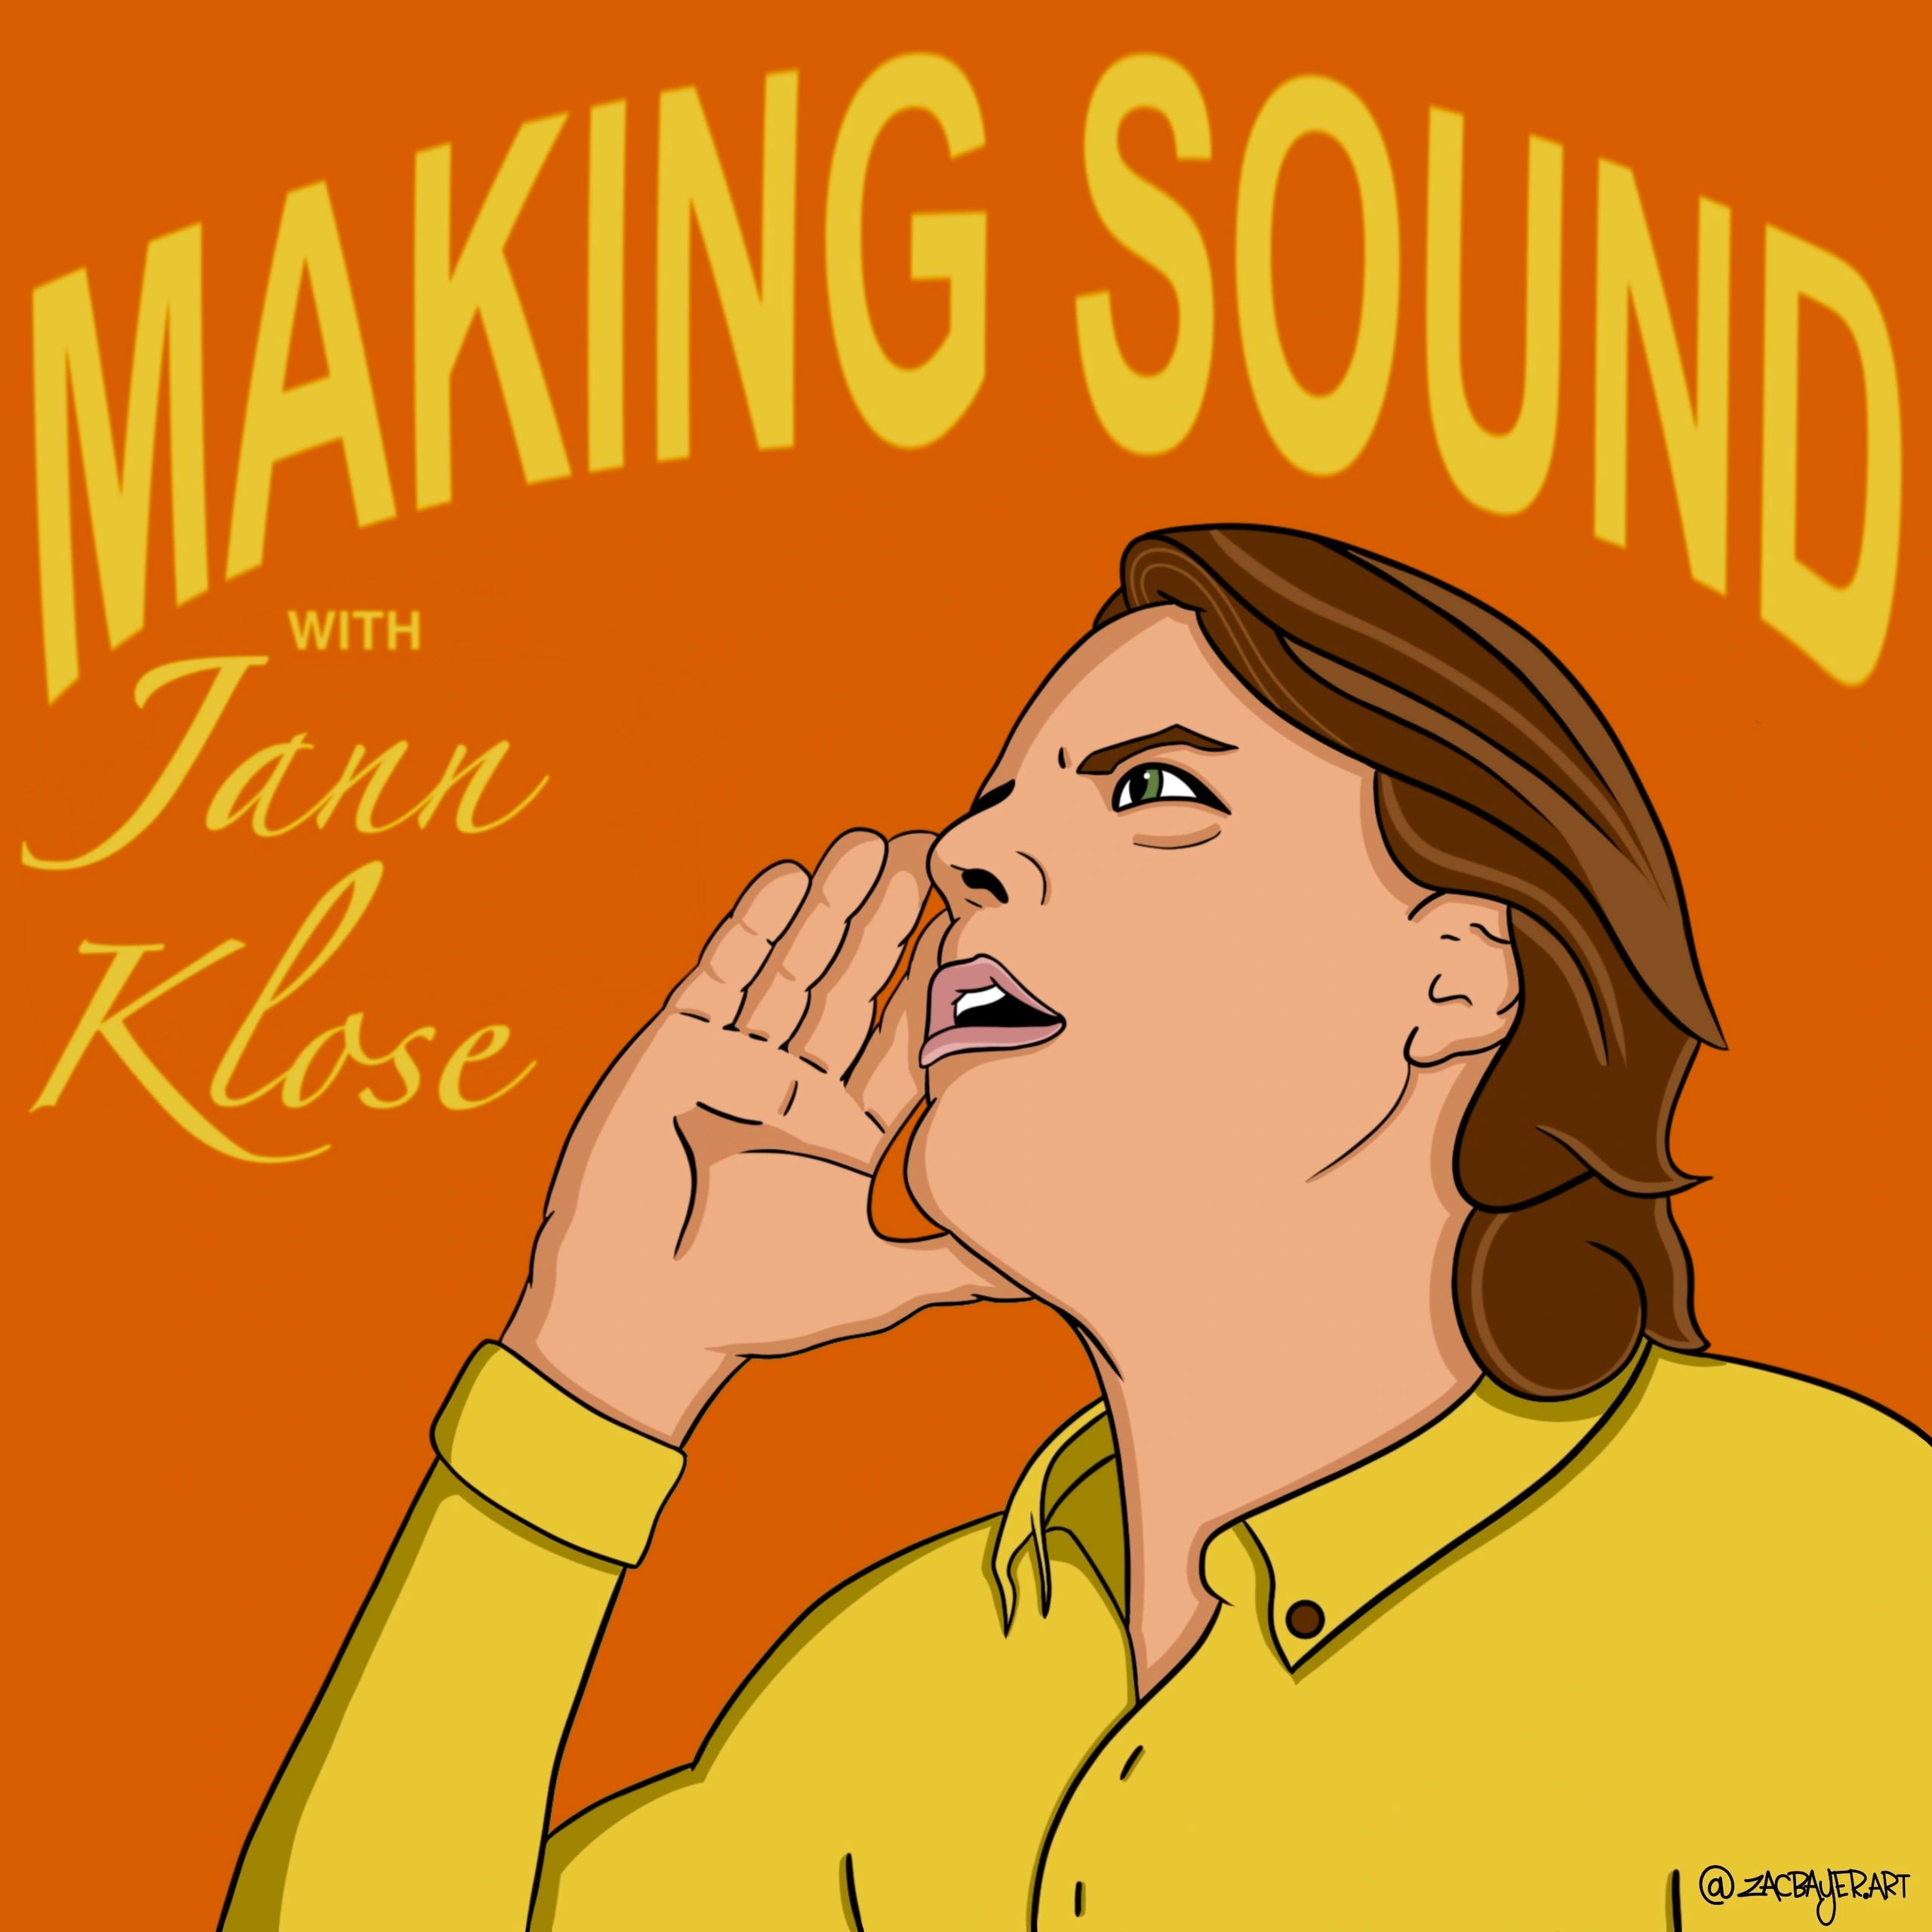 jann klose making sound podcast logo